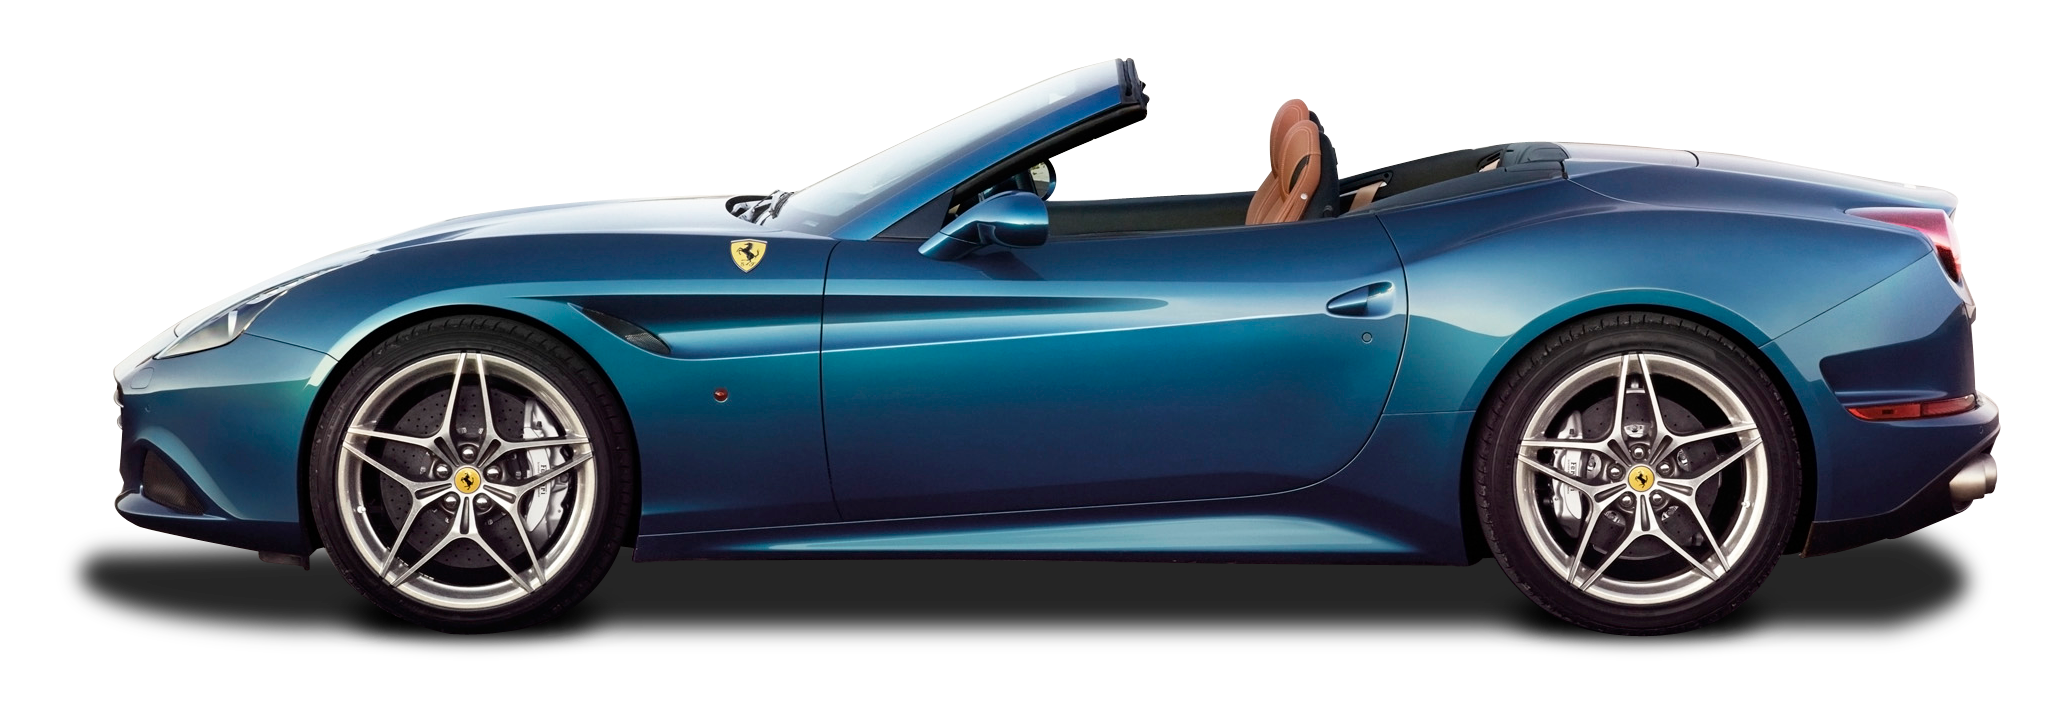 Imagen Ferrari PNG convertible